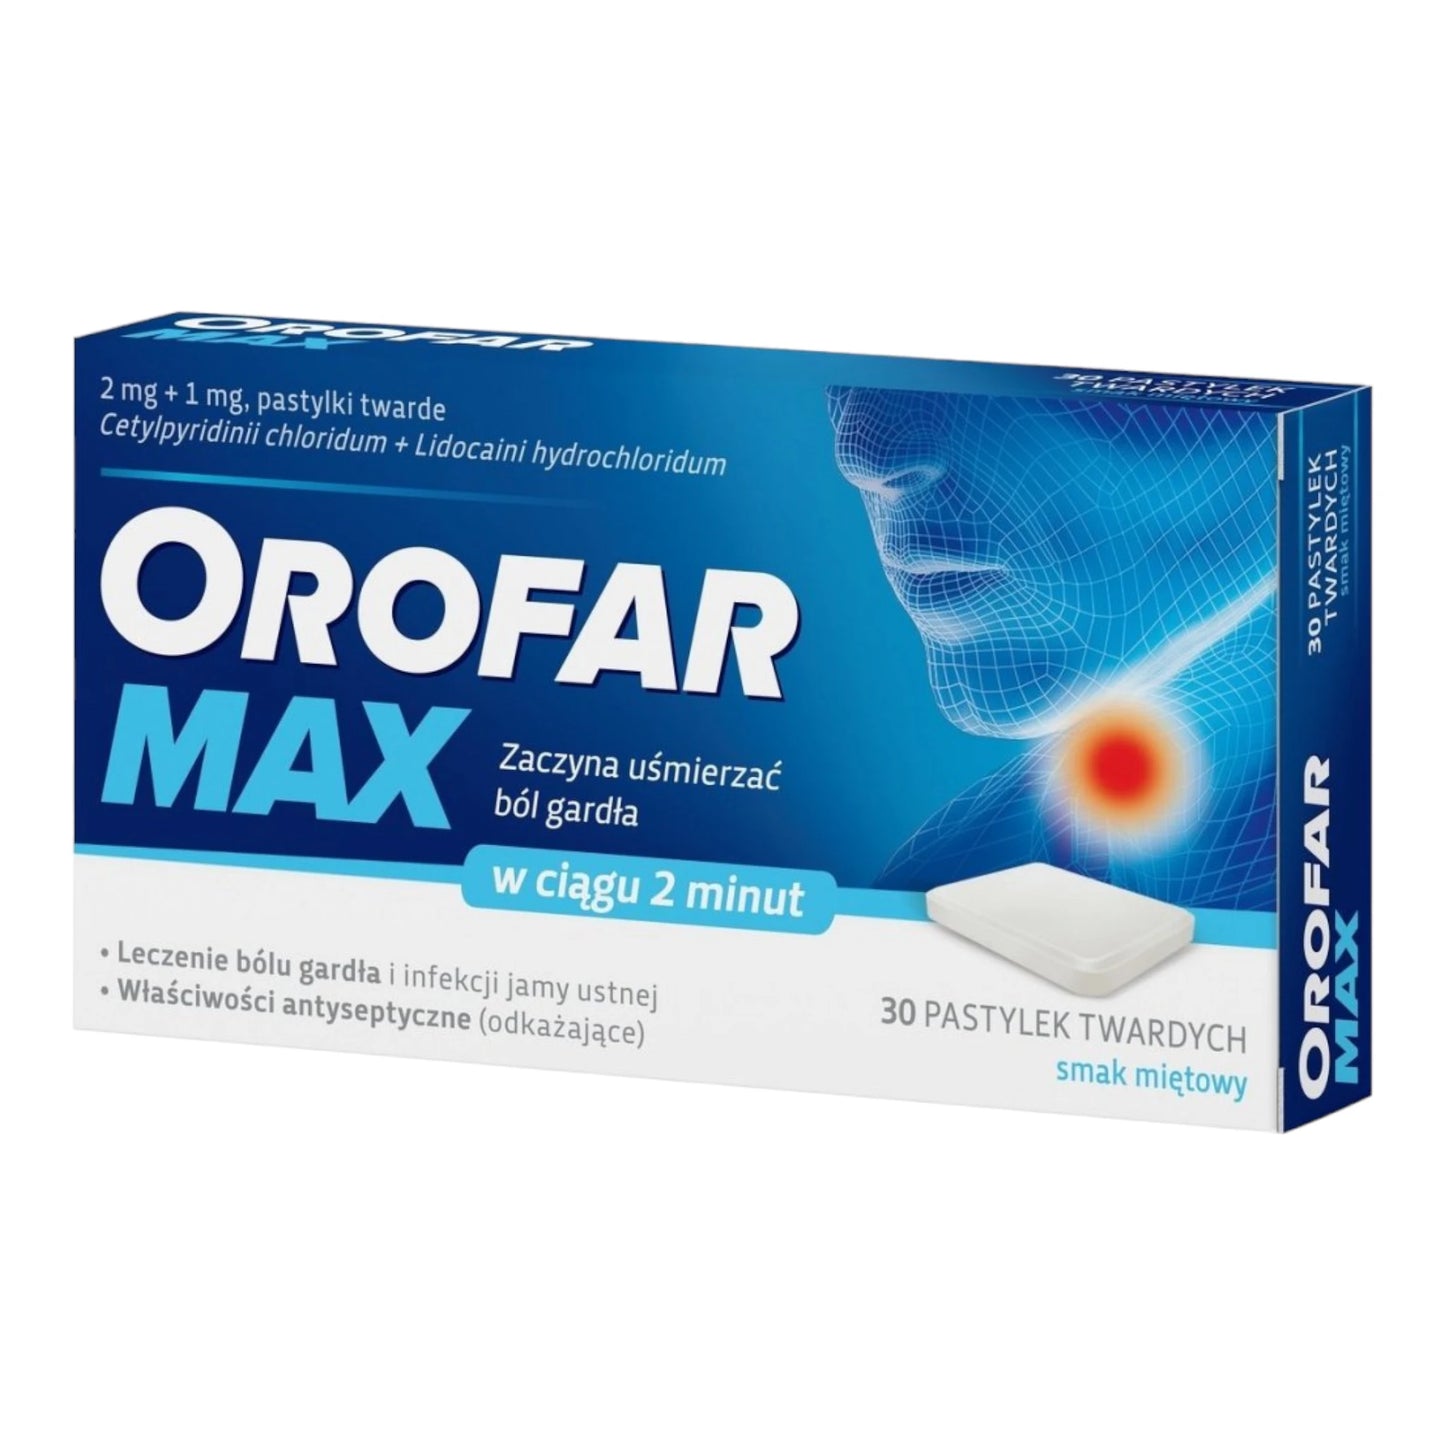 orofar max tablets